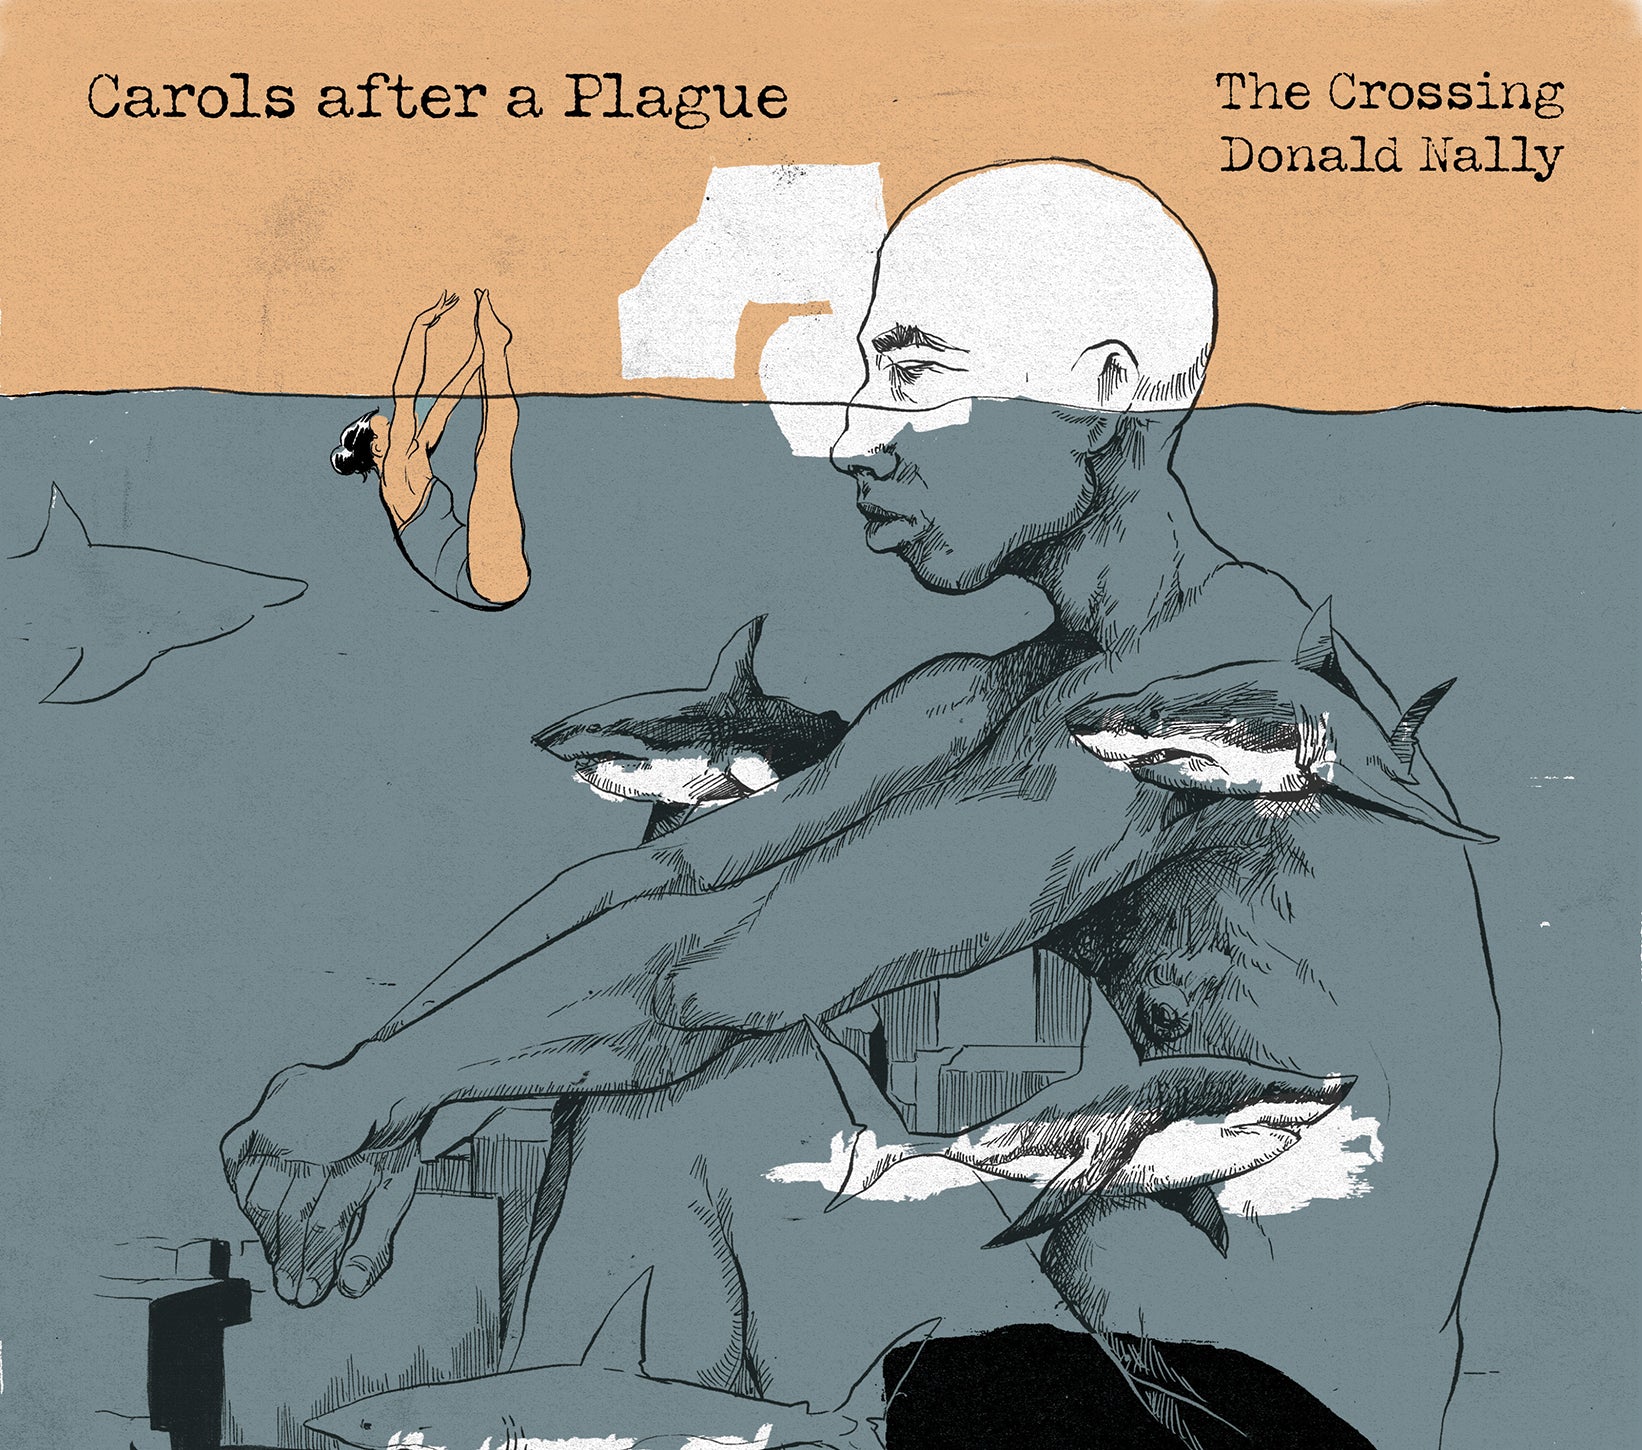 Carols after a Plague / Nally, The Crossing